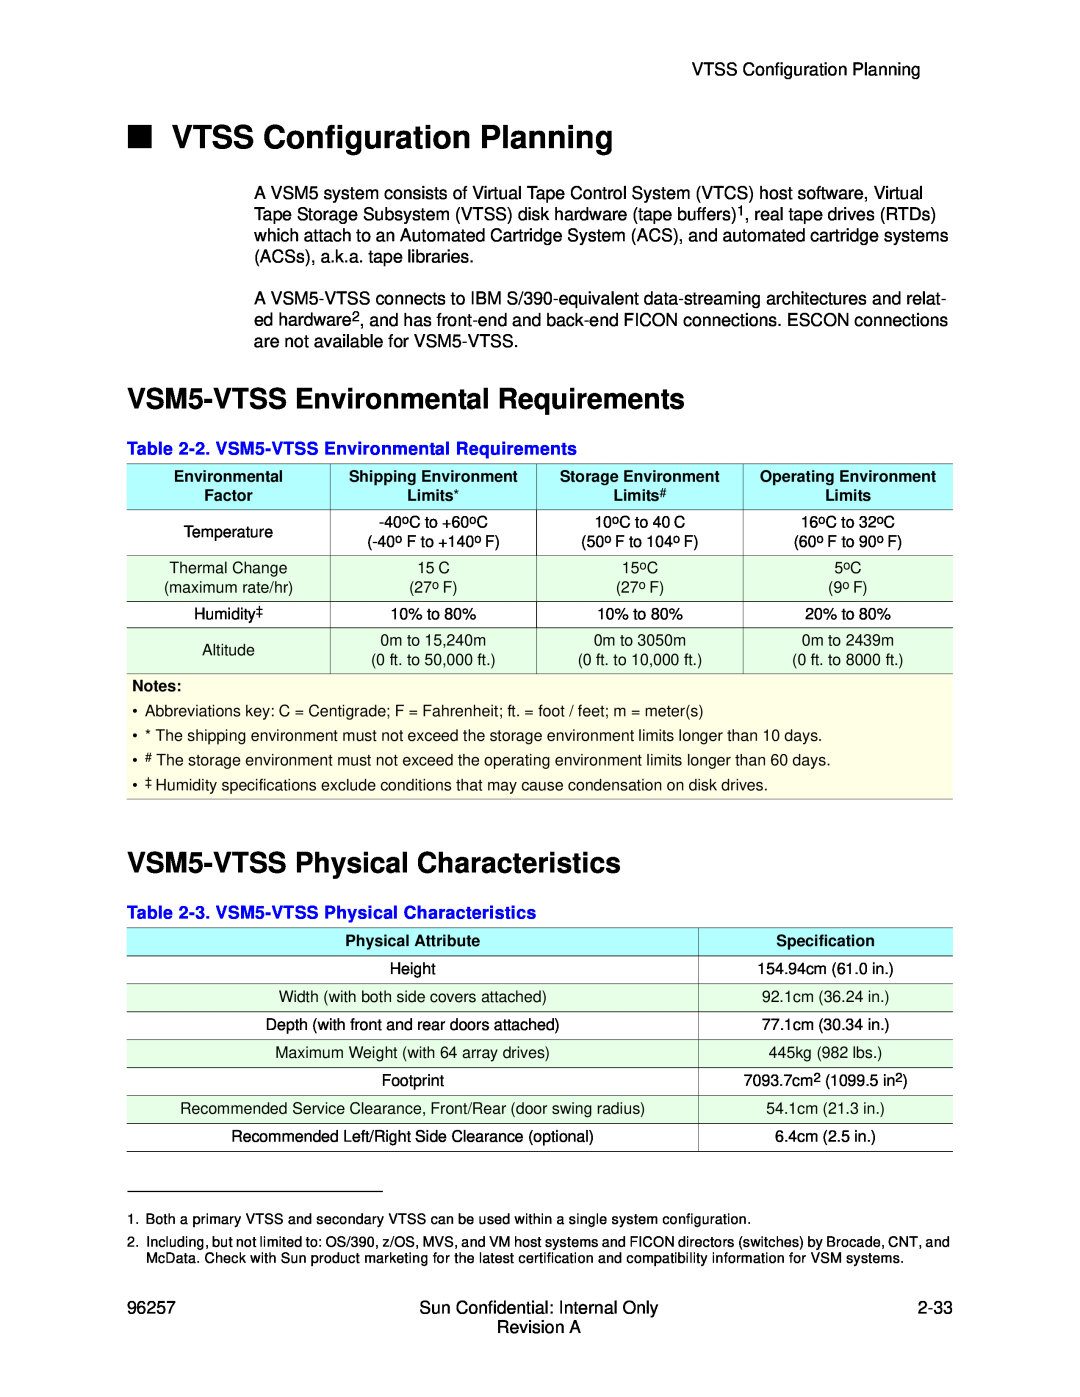 Sun Microsystems 96257 manual VTSS Configuration Planning, VSM5-VTSS Environmental Requirements 